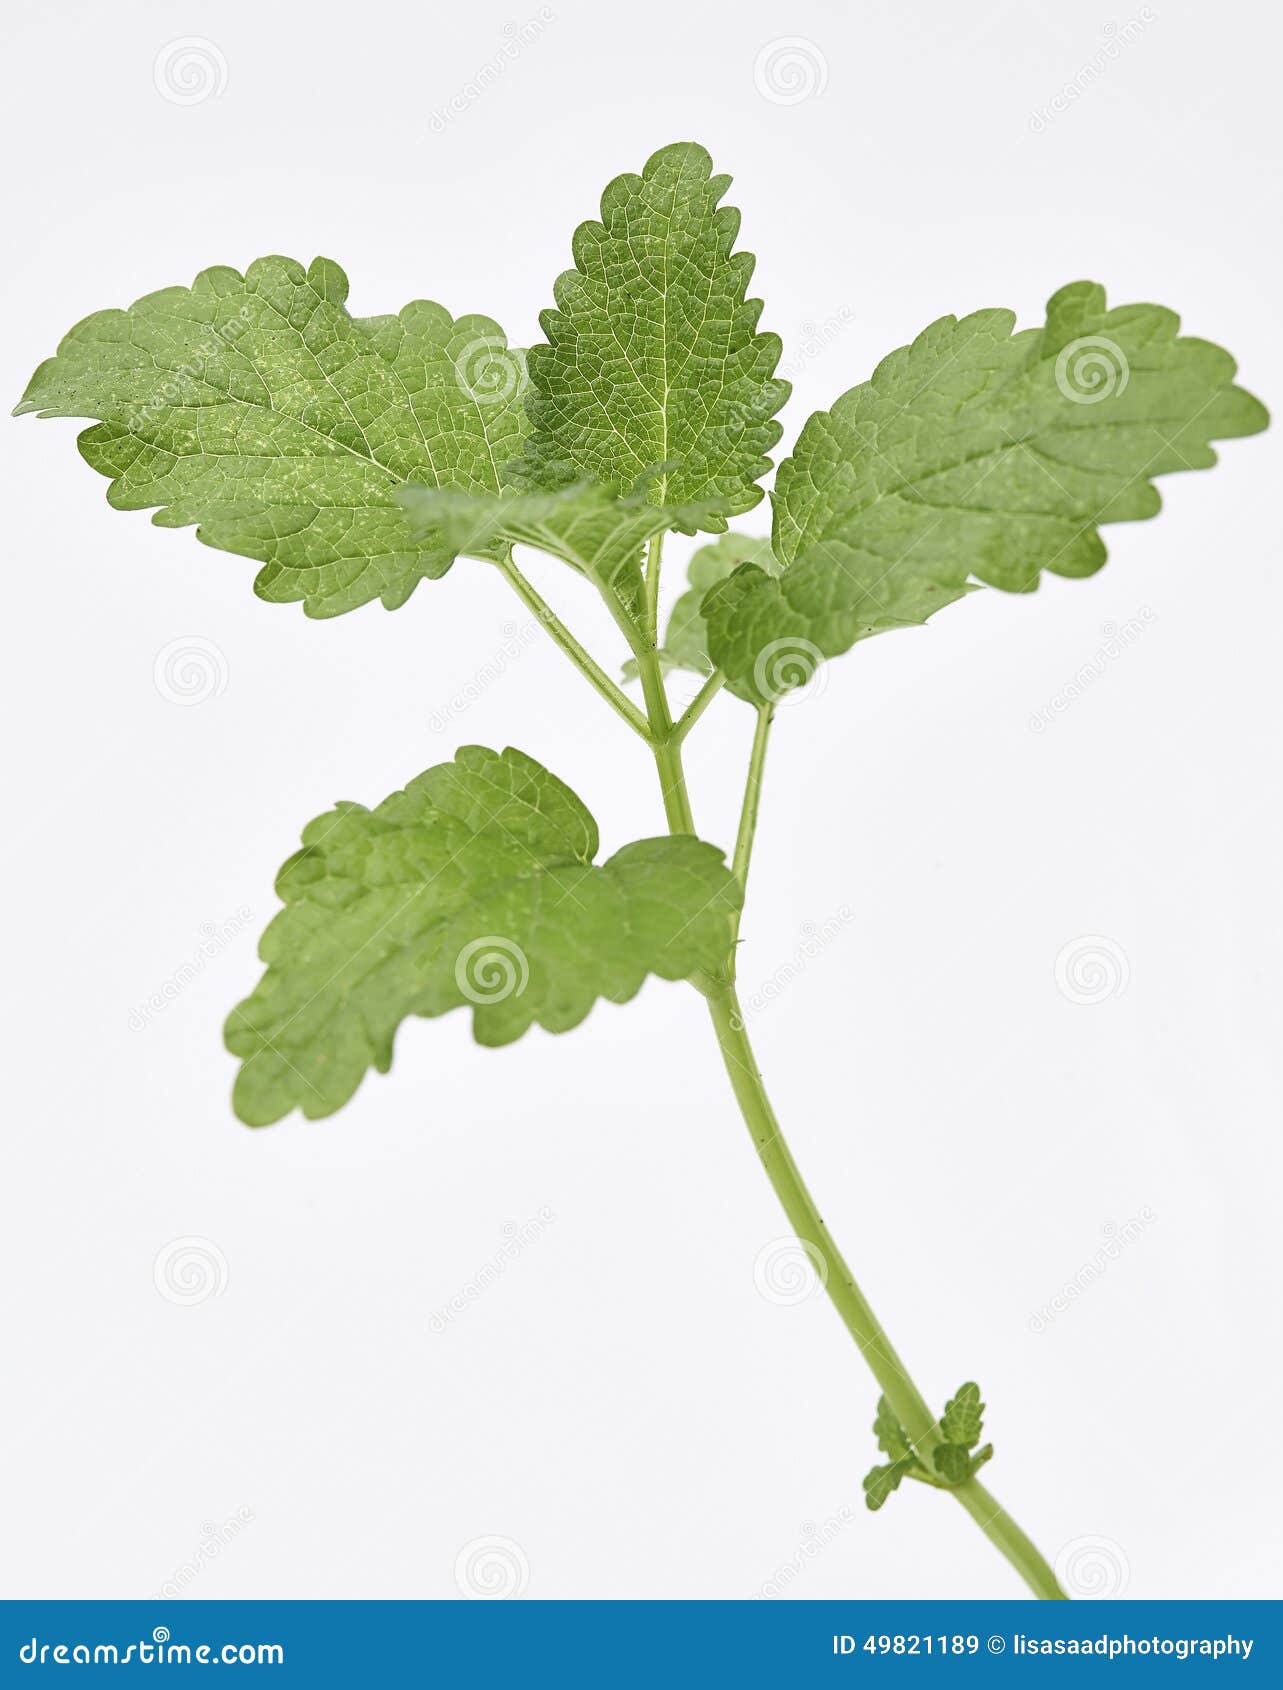 Lemon Balm Leaves stock image. Image of plant, fresh - 49821189